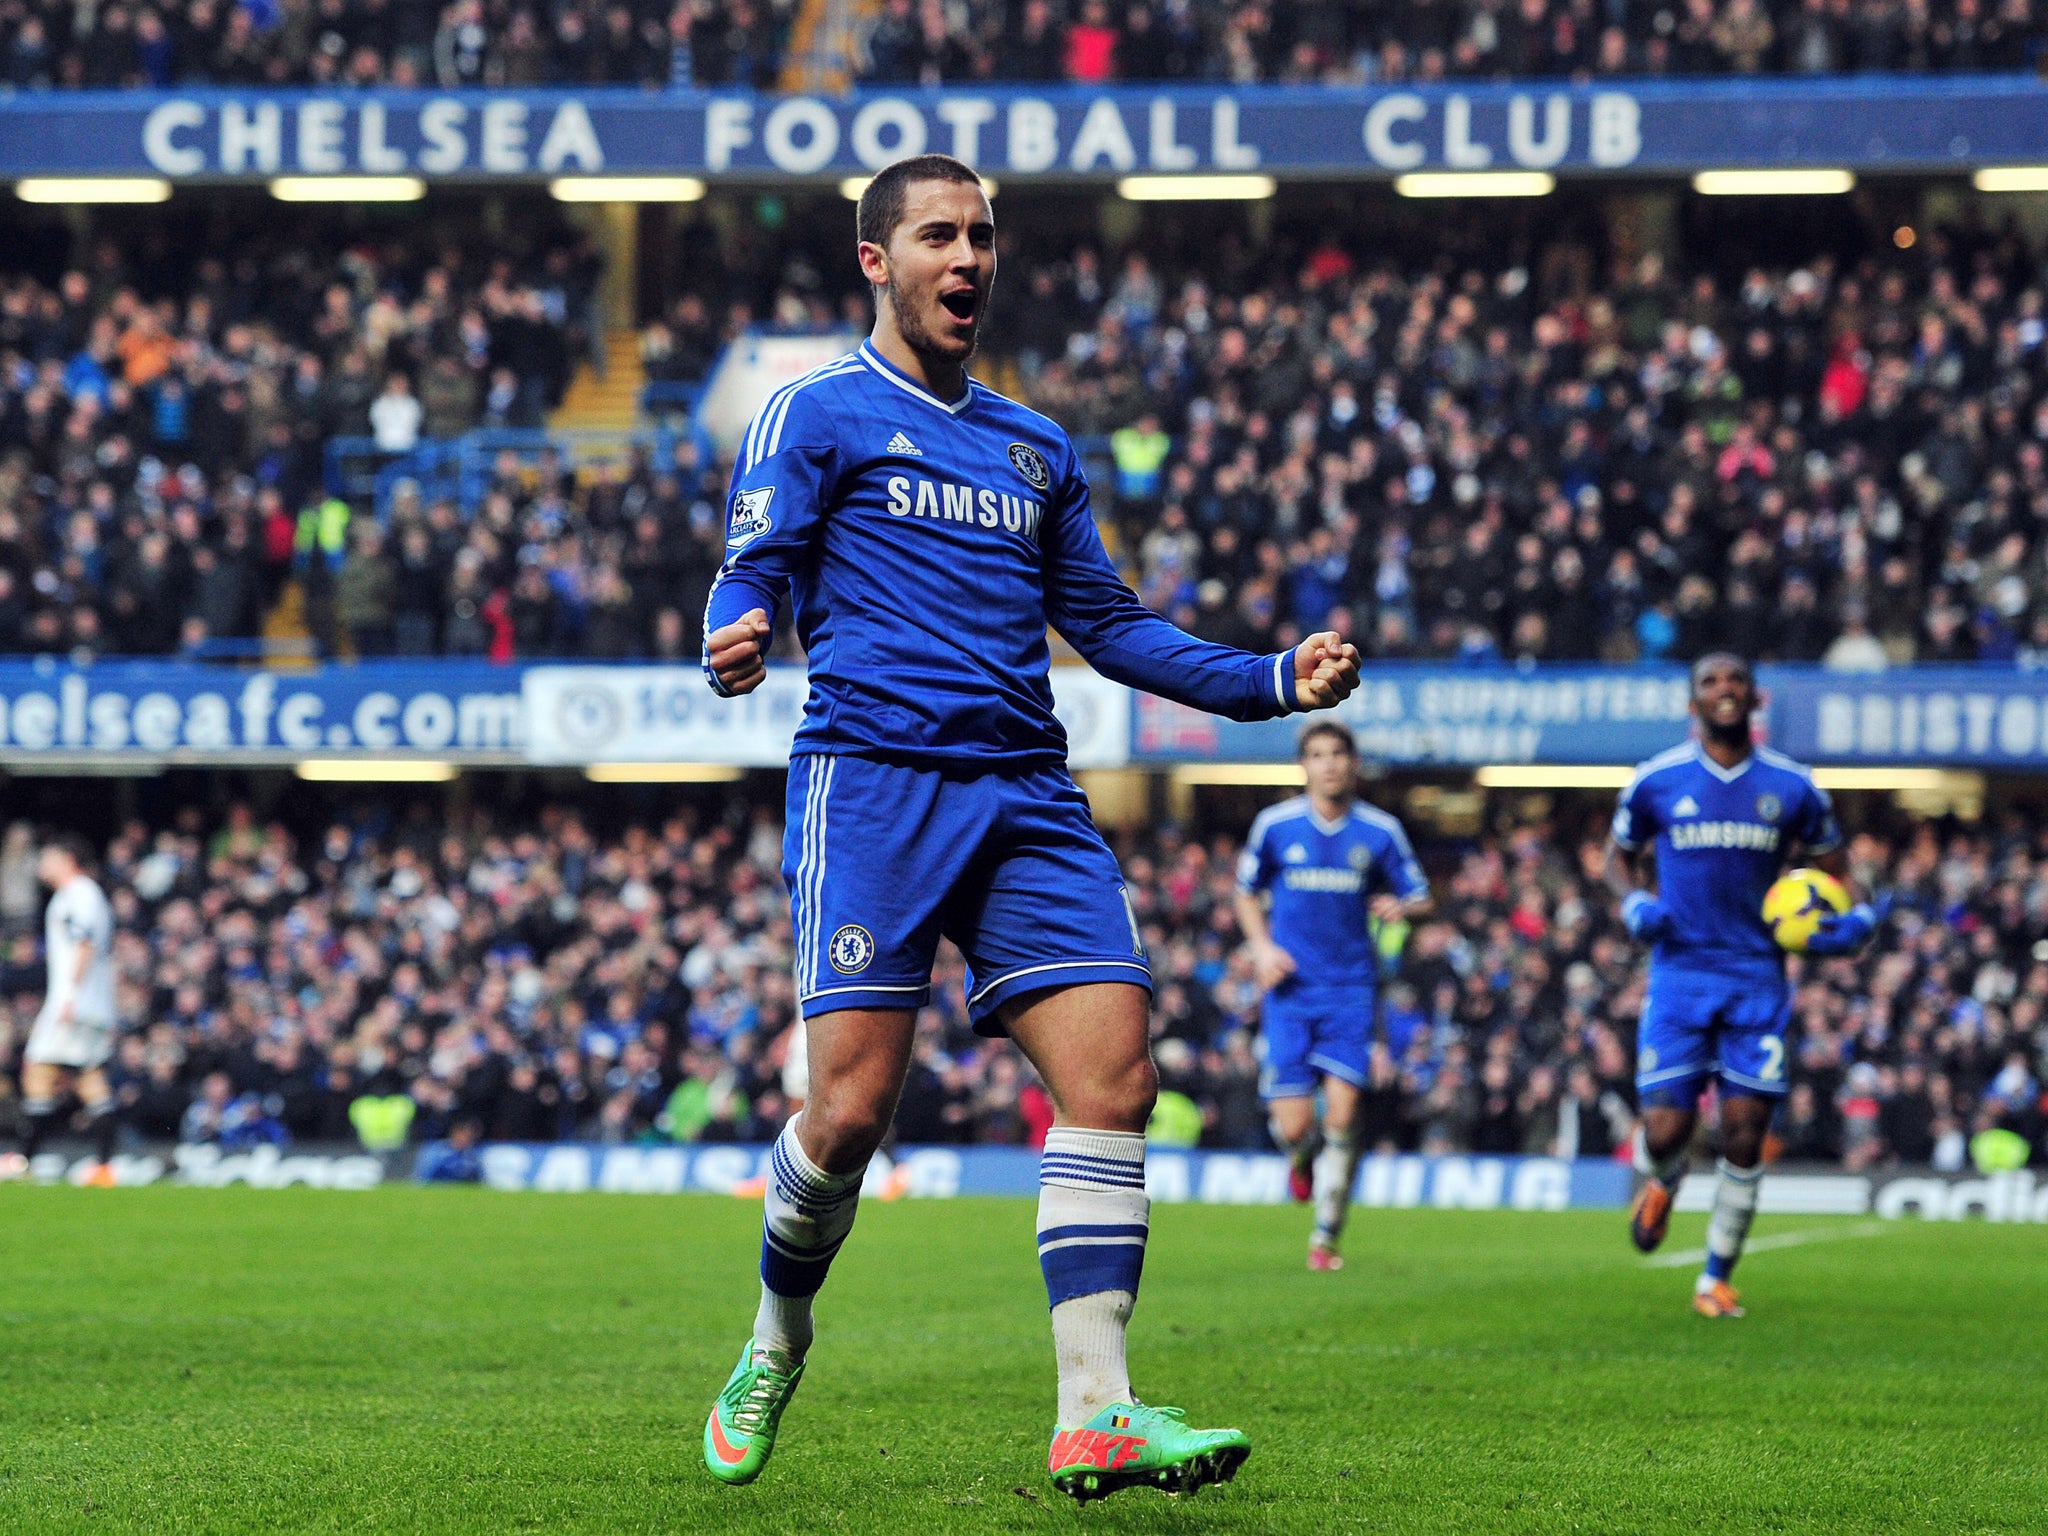 Eden Hazard celebrates after scoring for Chelsea against Swansea